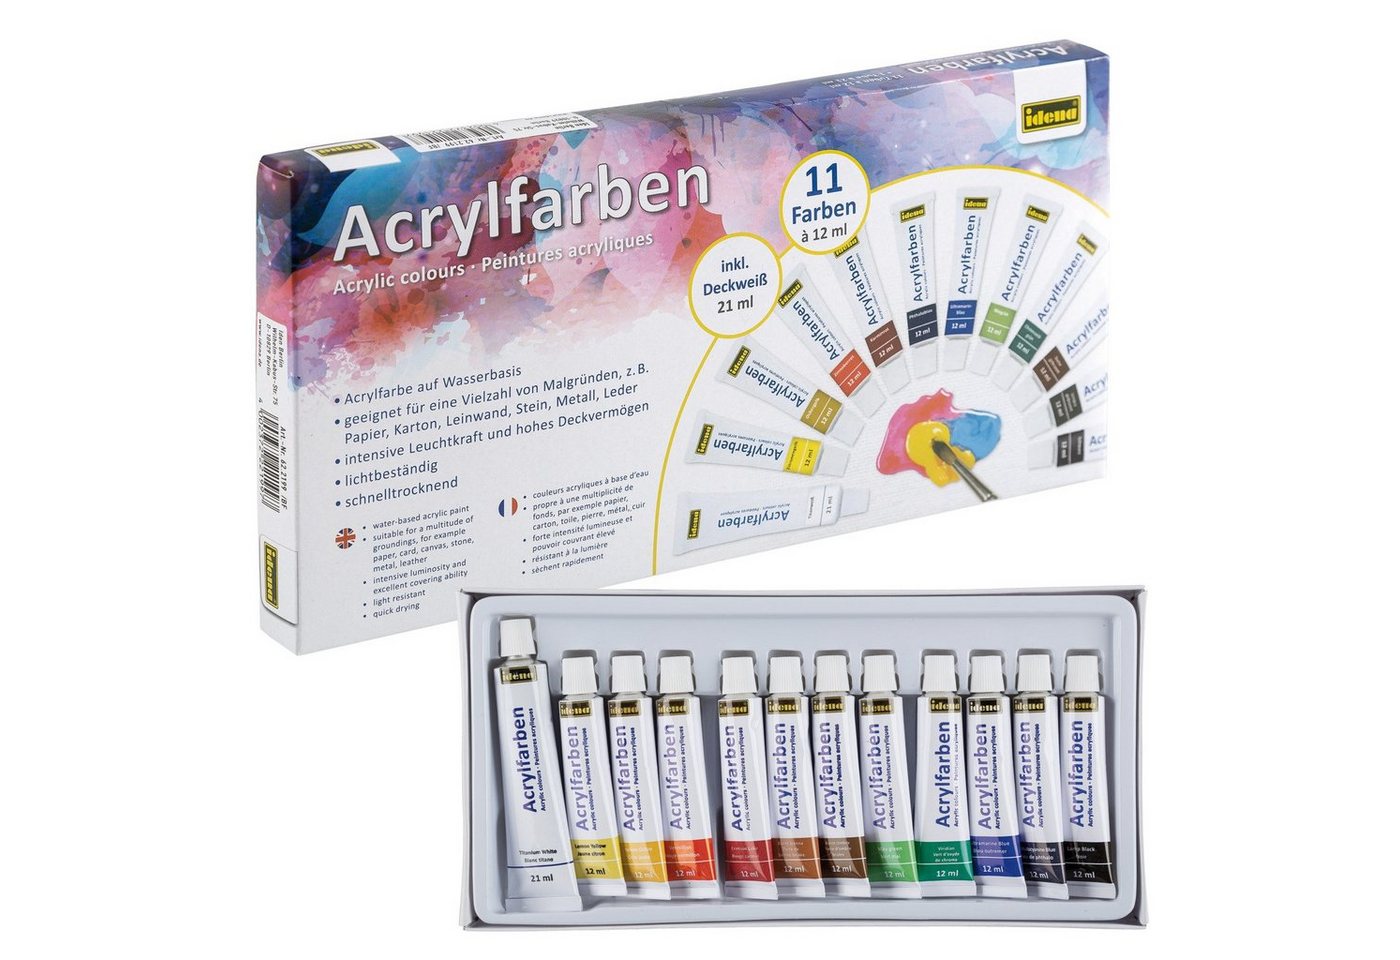 Idena Acrylfarbe Idena 622199 – Acrylfarbenset, 12 teilig, mit deckenden Acrylfarben von Idena